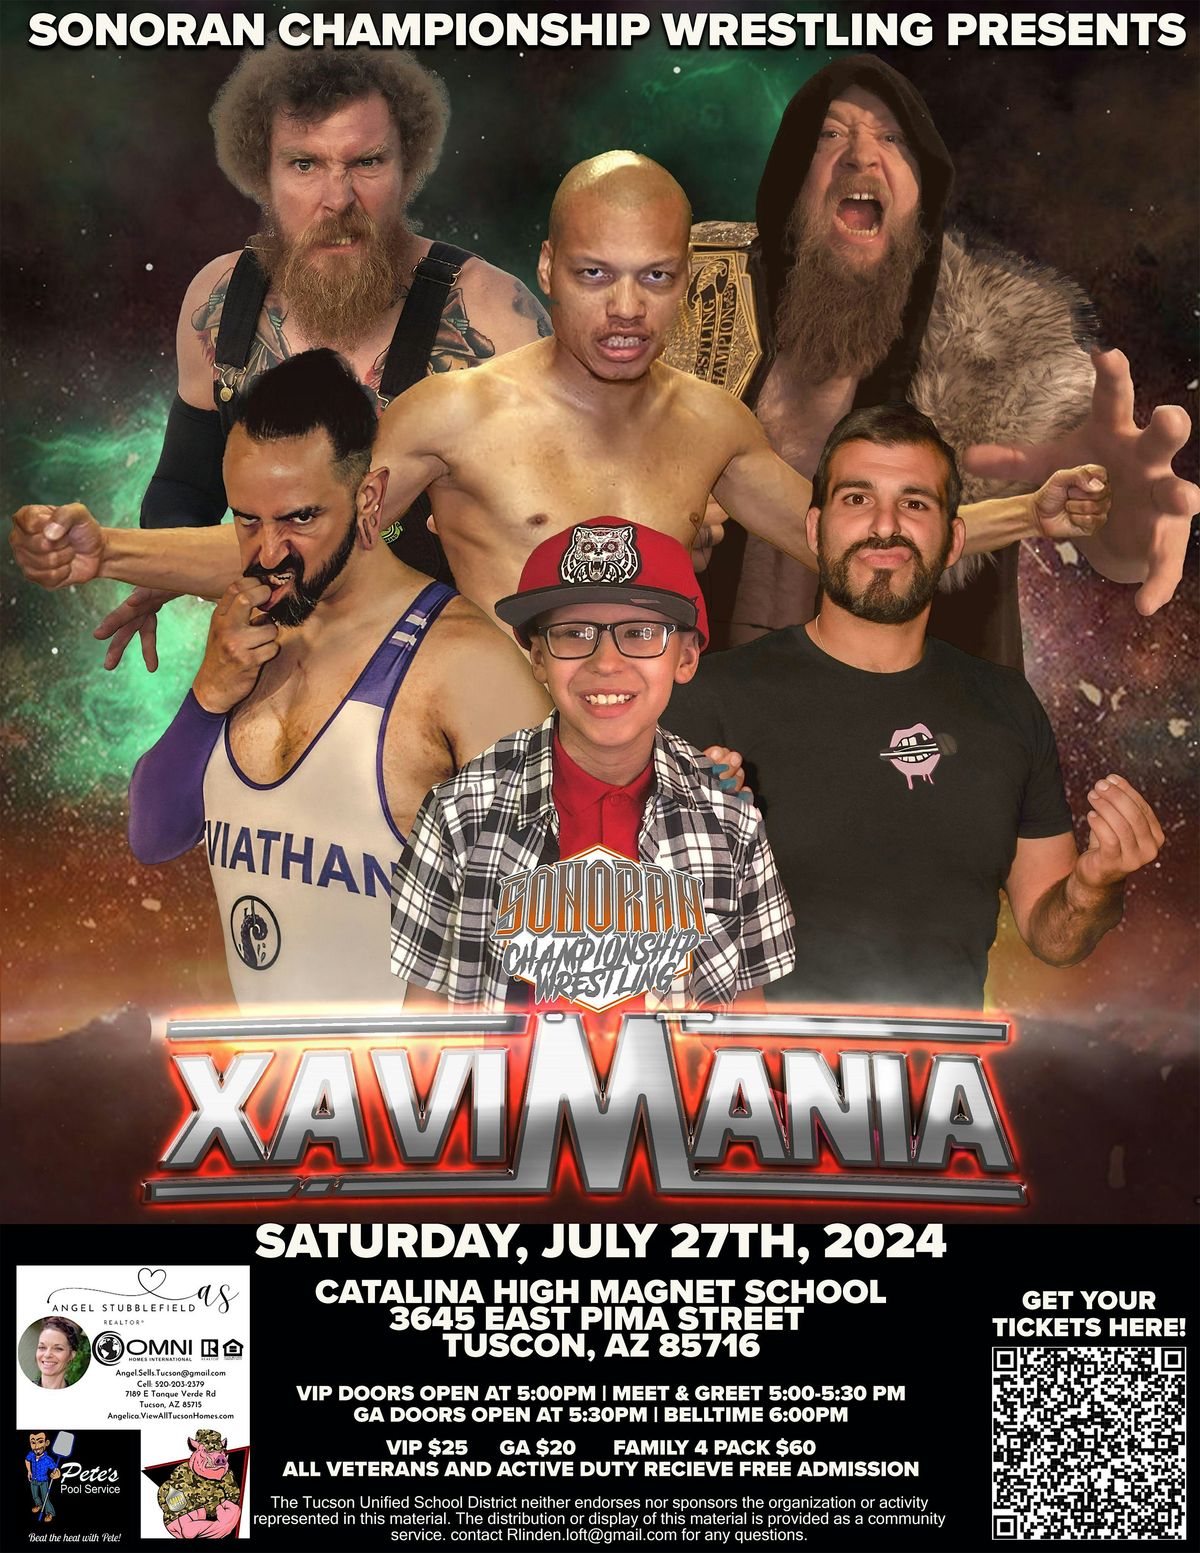 Sonoran Championship Wrestling Presents XaviMania